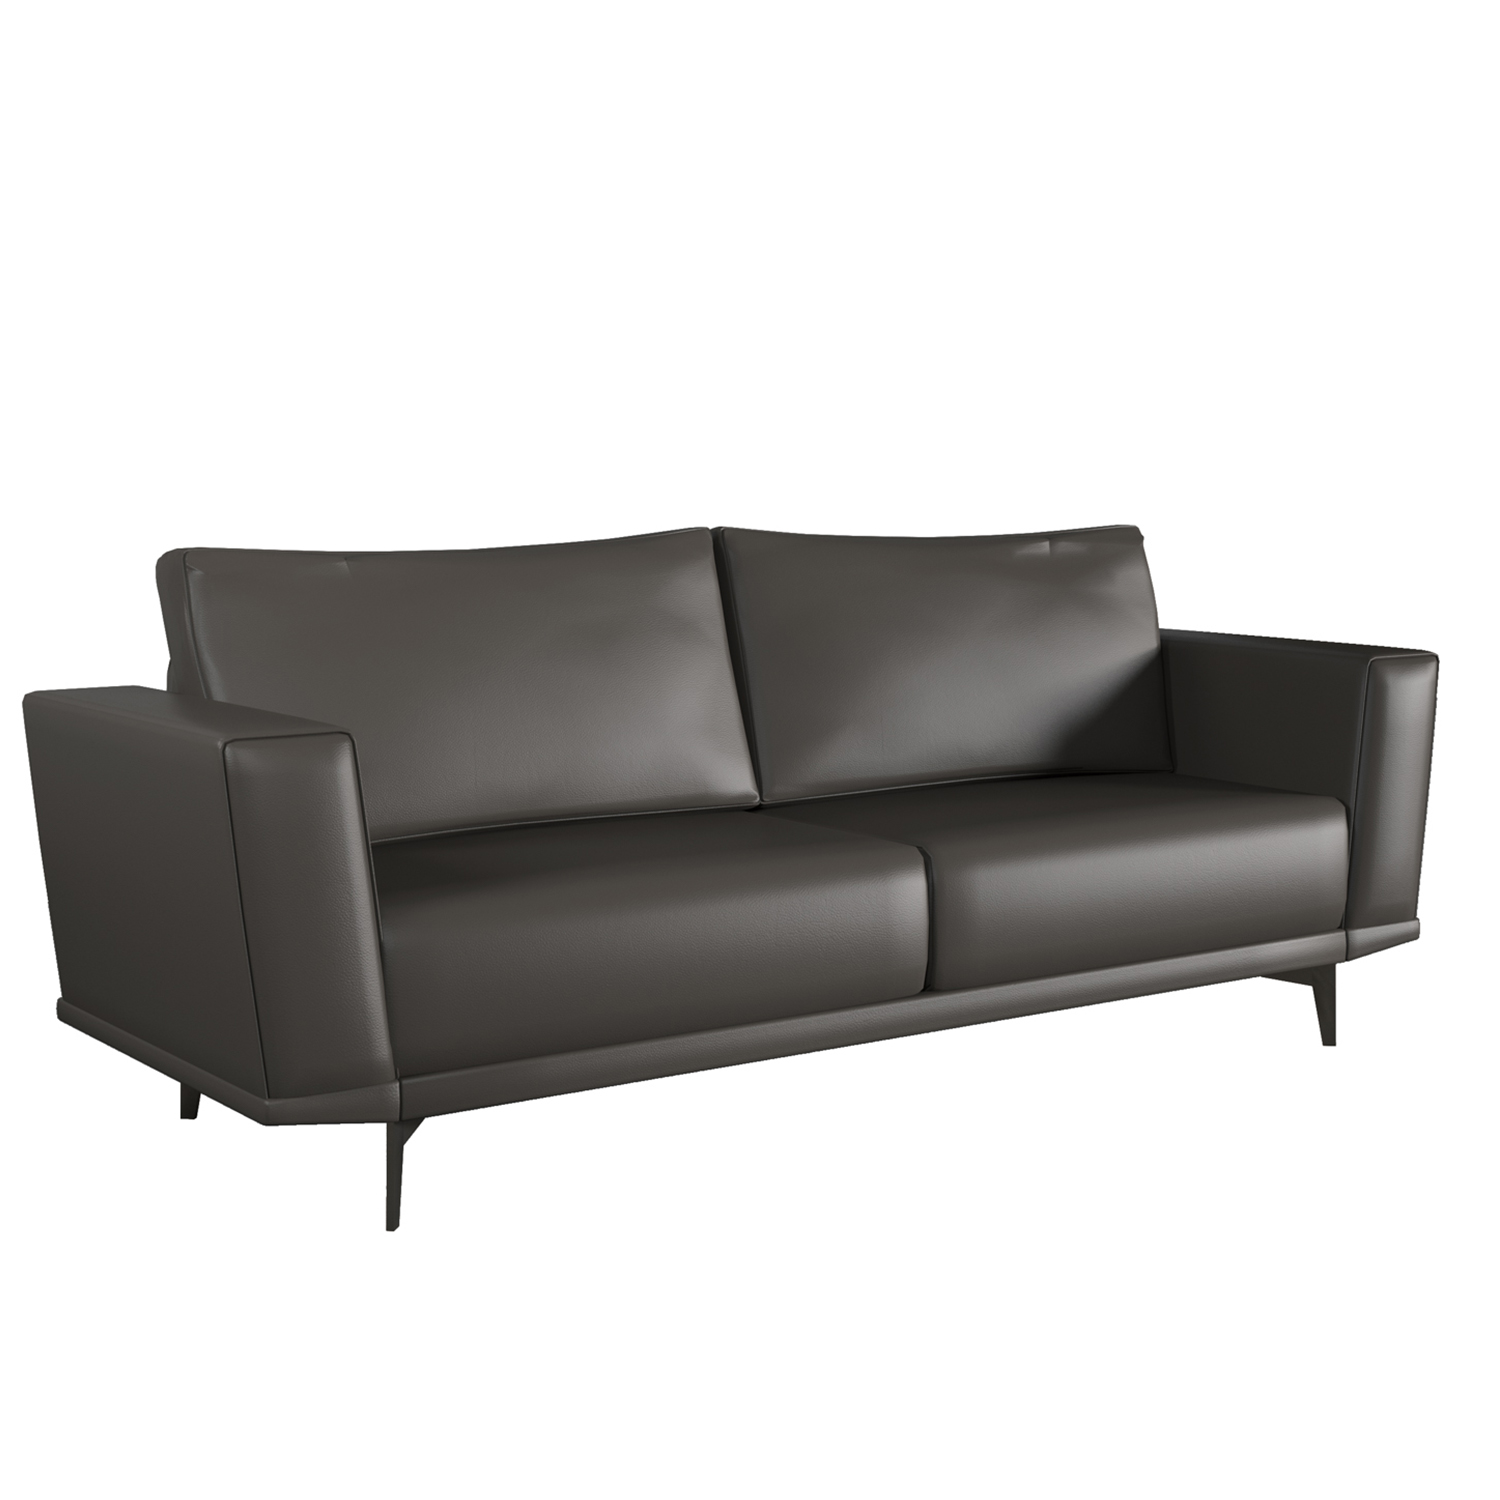 Modern Simple Design Sofa